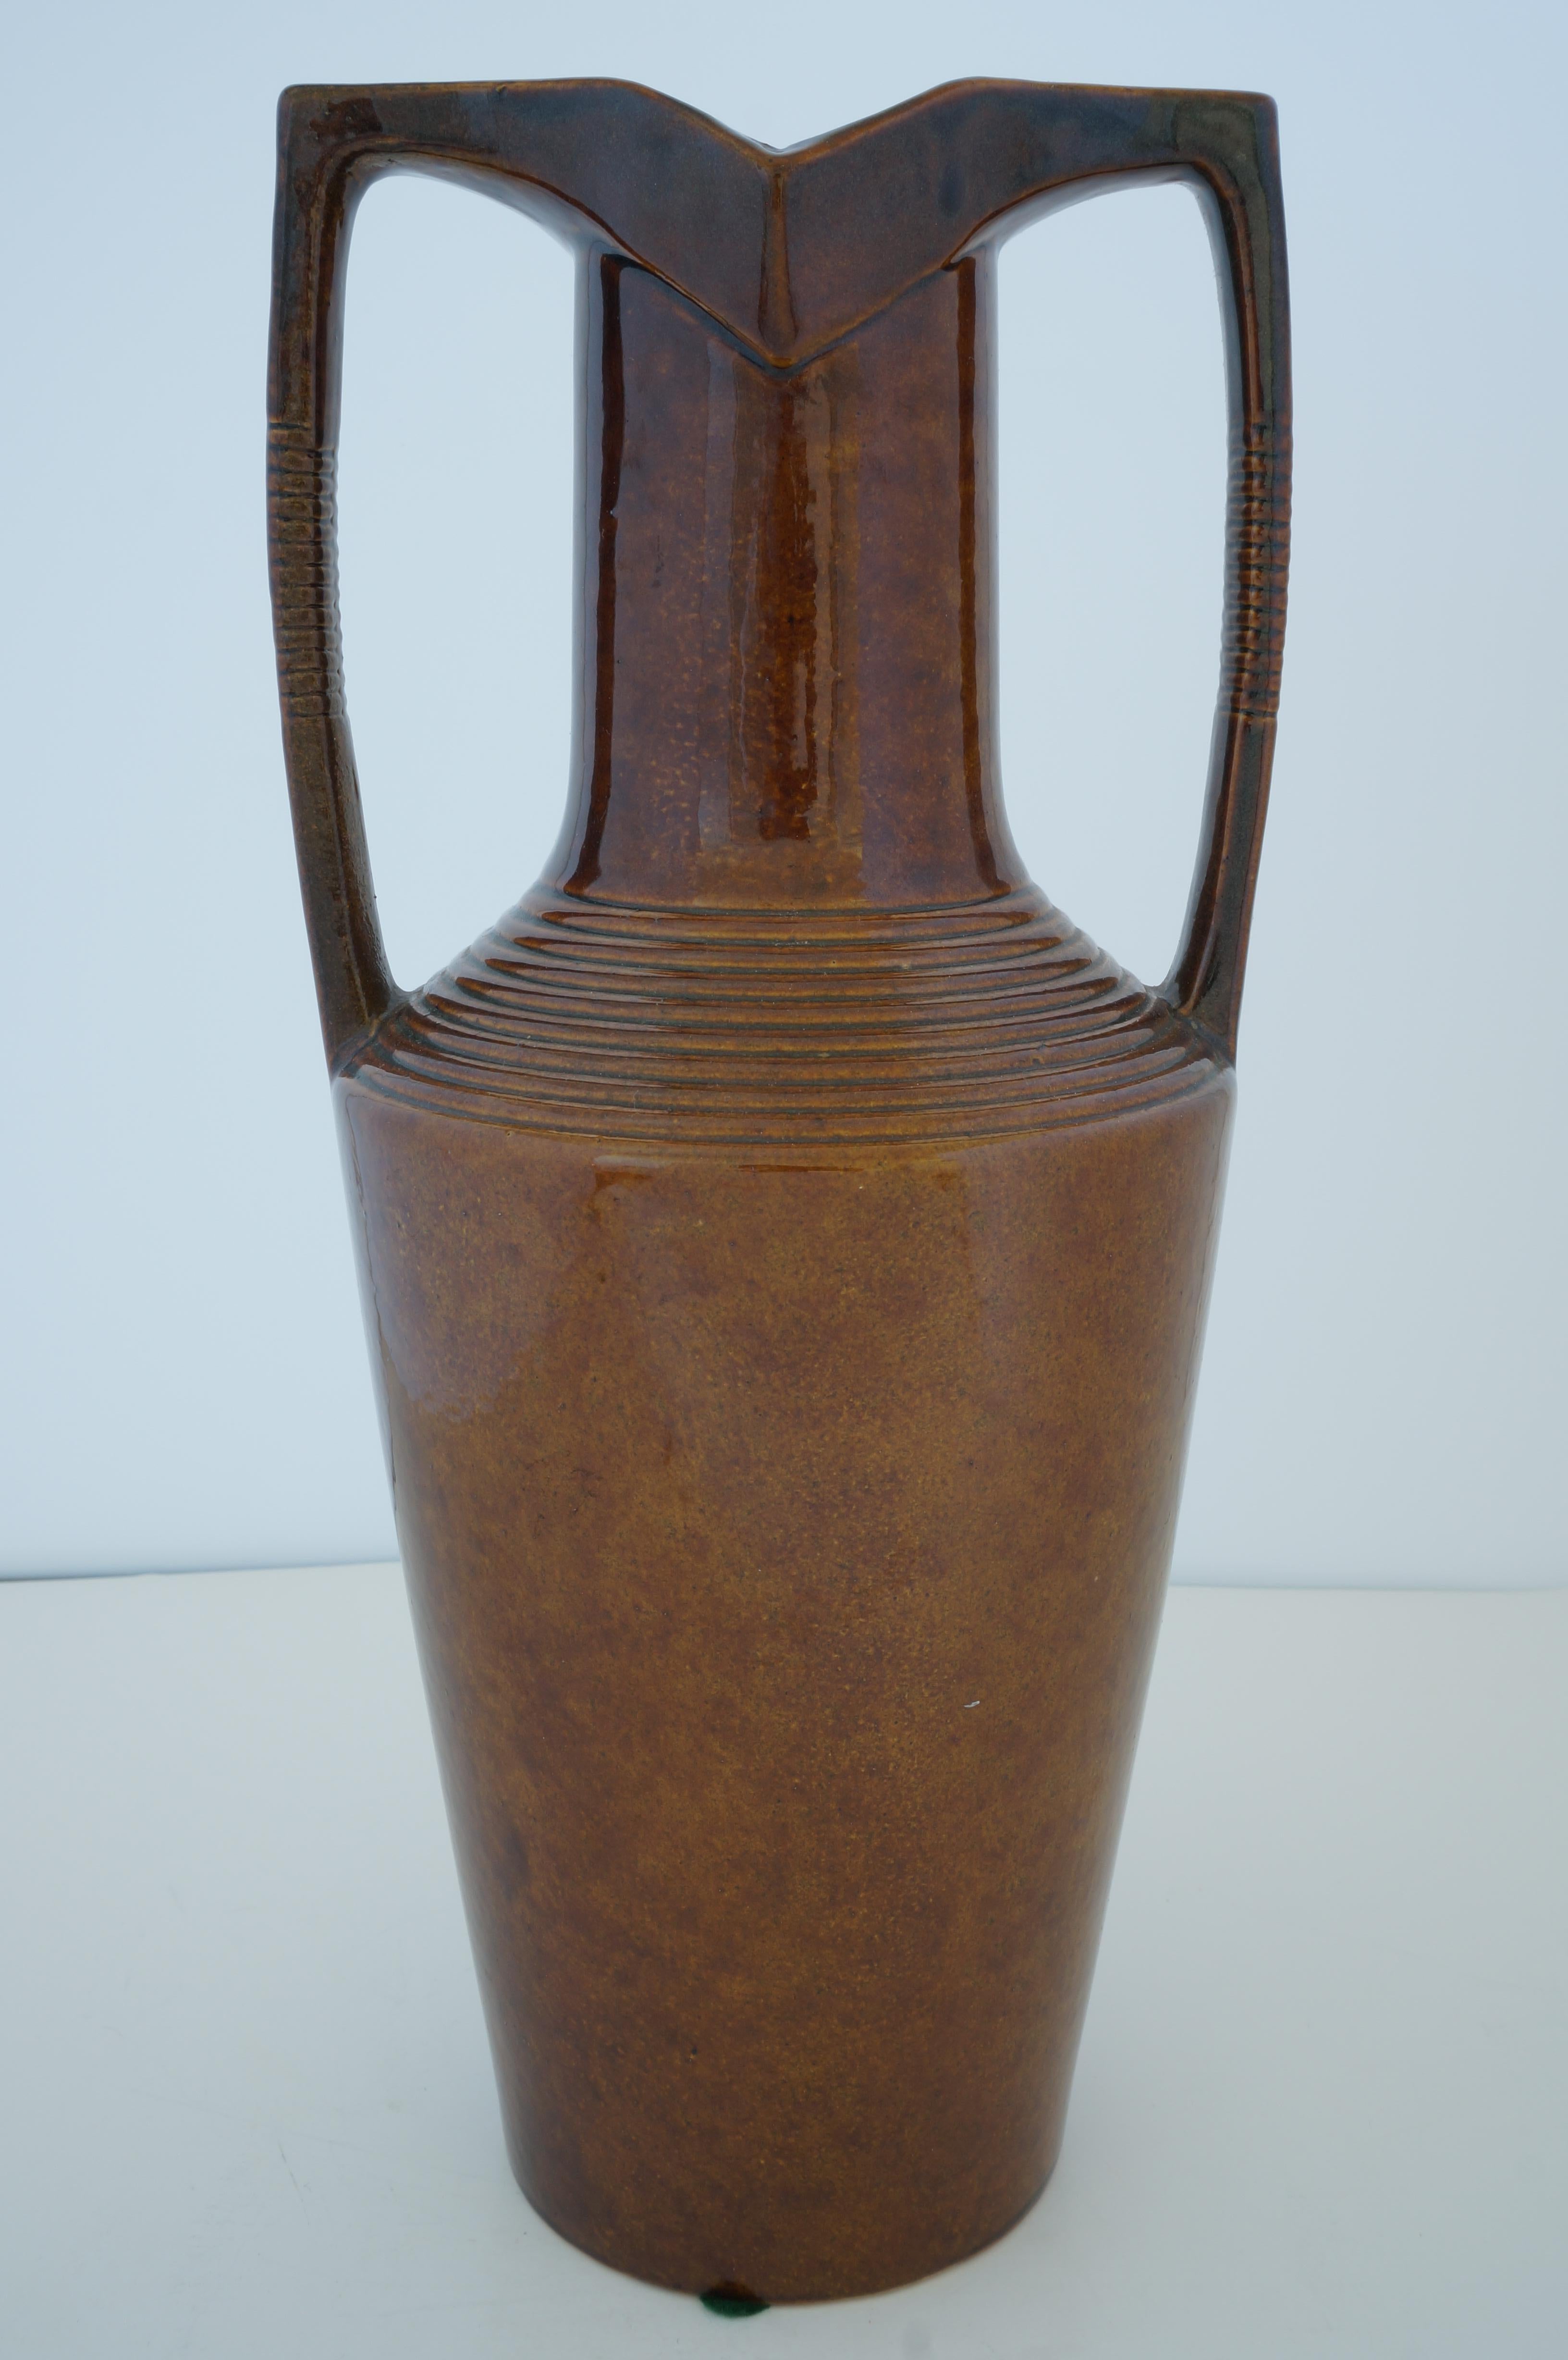 Joma Vases - 2 For Sale at 1stDibs | vase joma prix, joma vase, vase joma